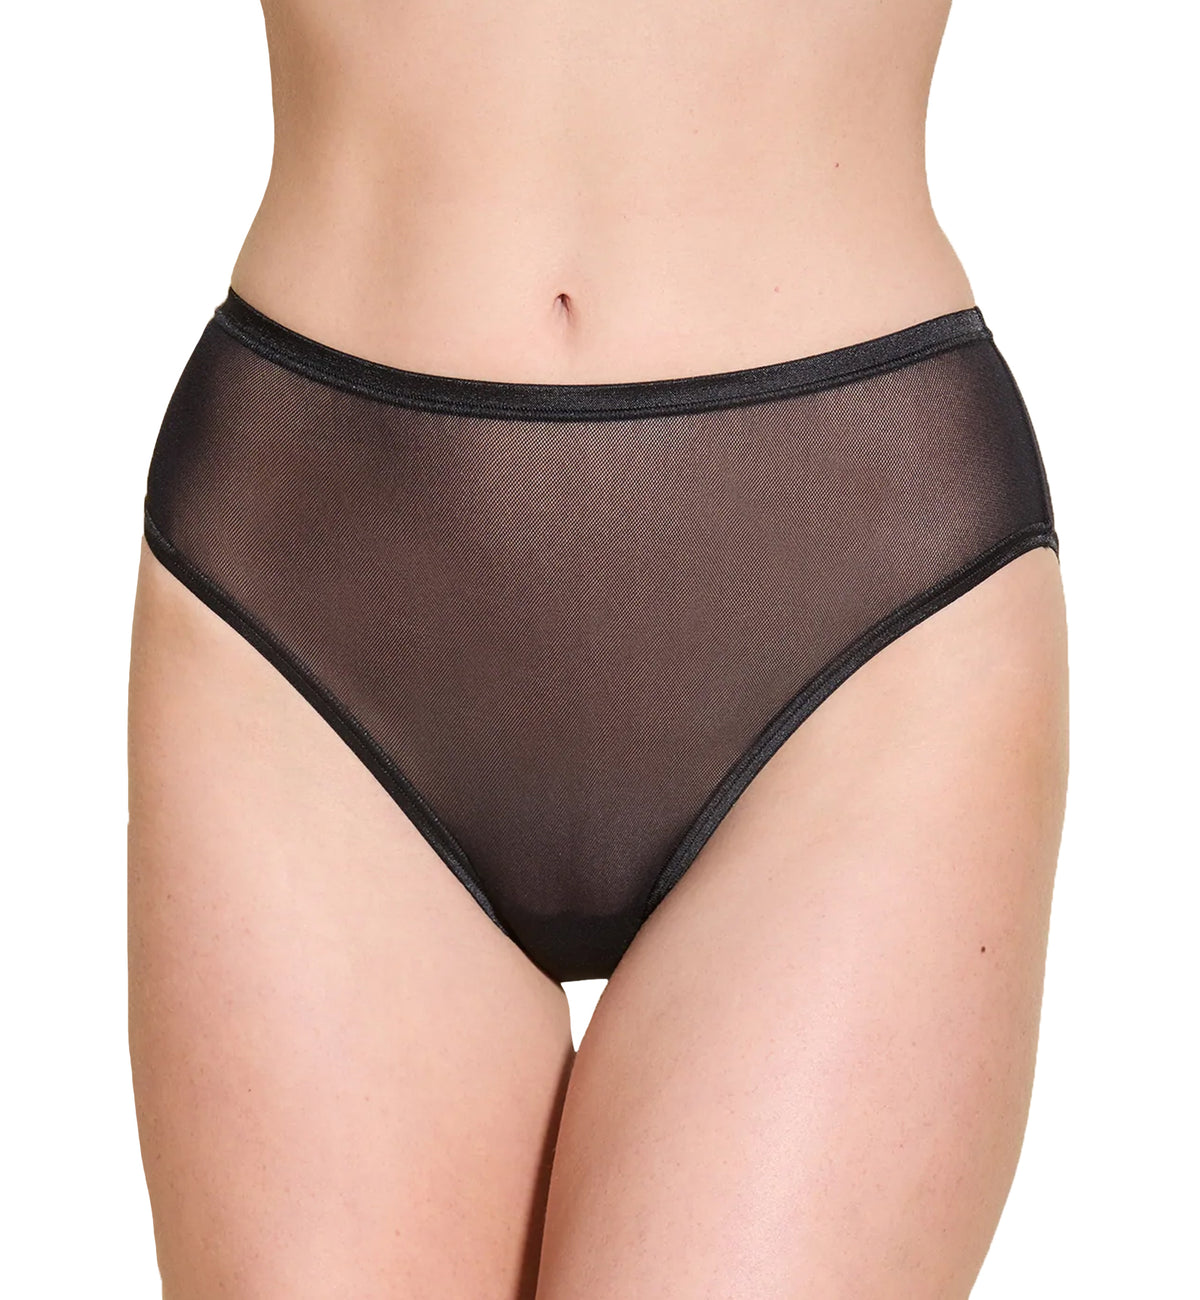 Cosabella Soire Confidence High Waist Brief Panty (SOIRC0562),Small,Black - Black,Small